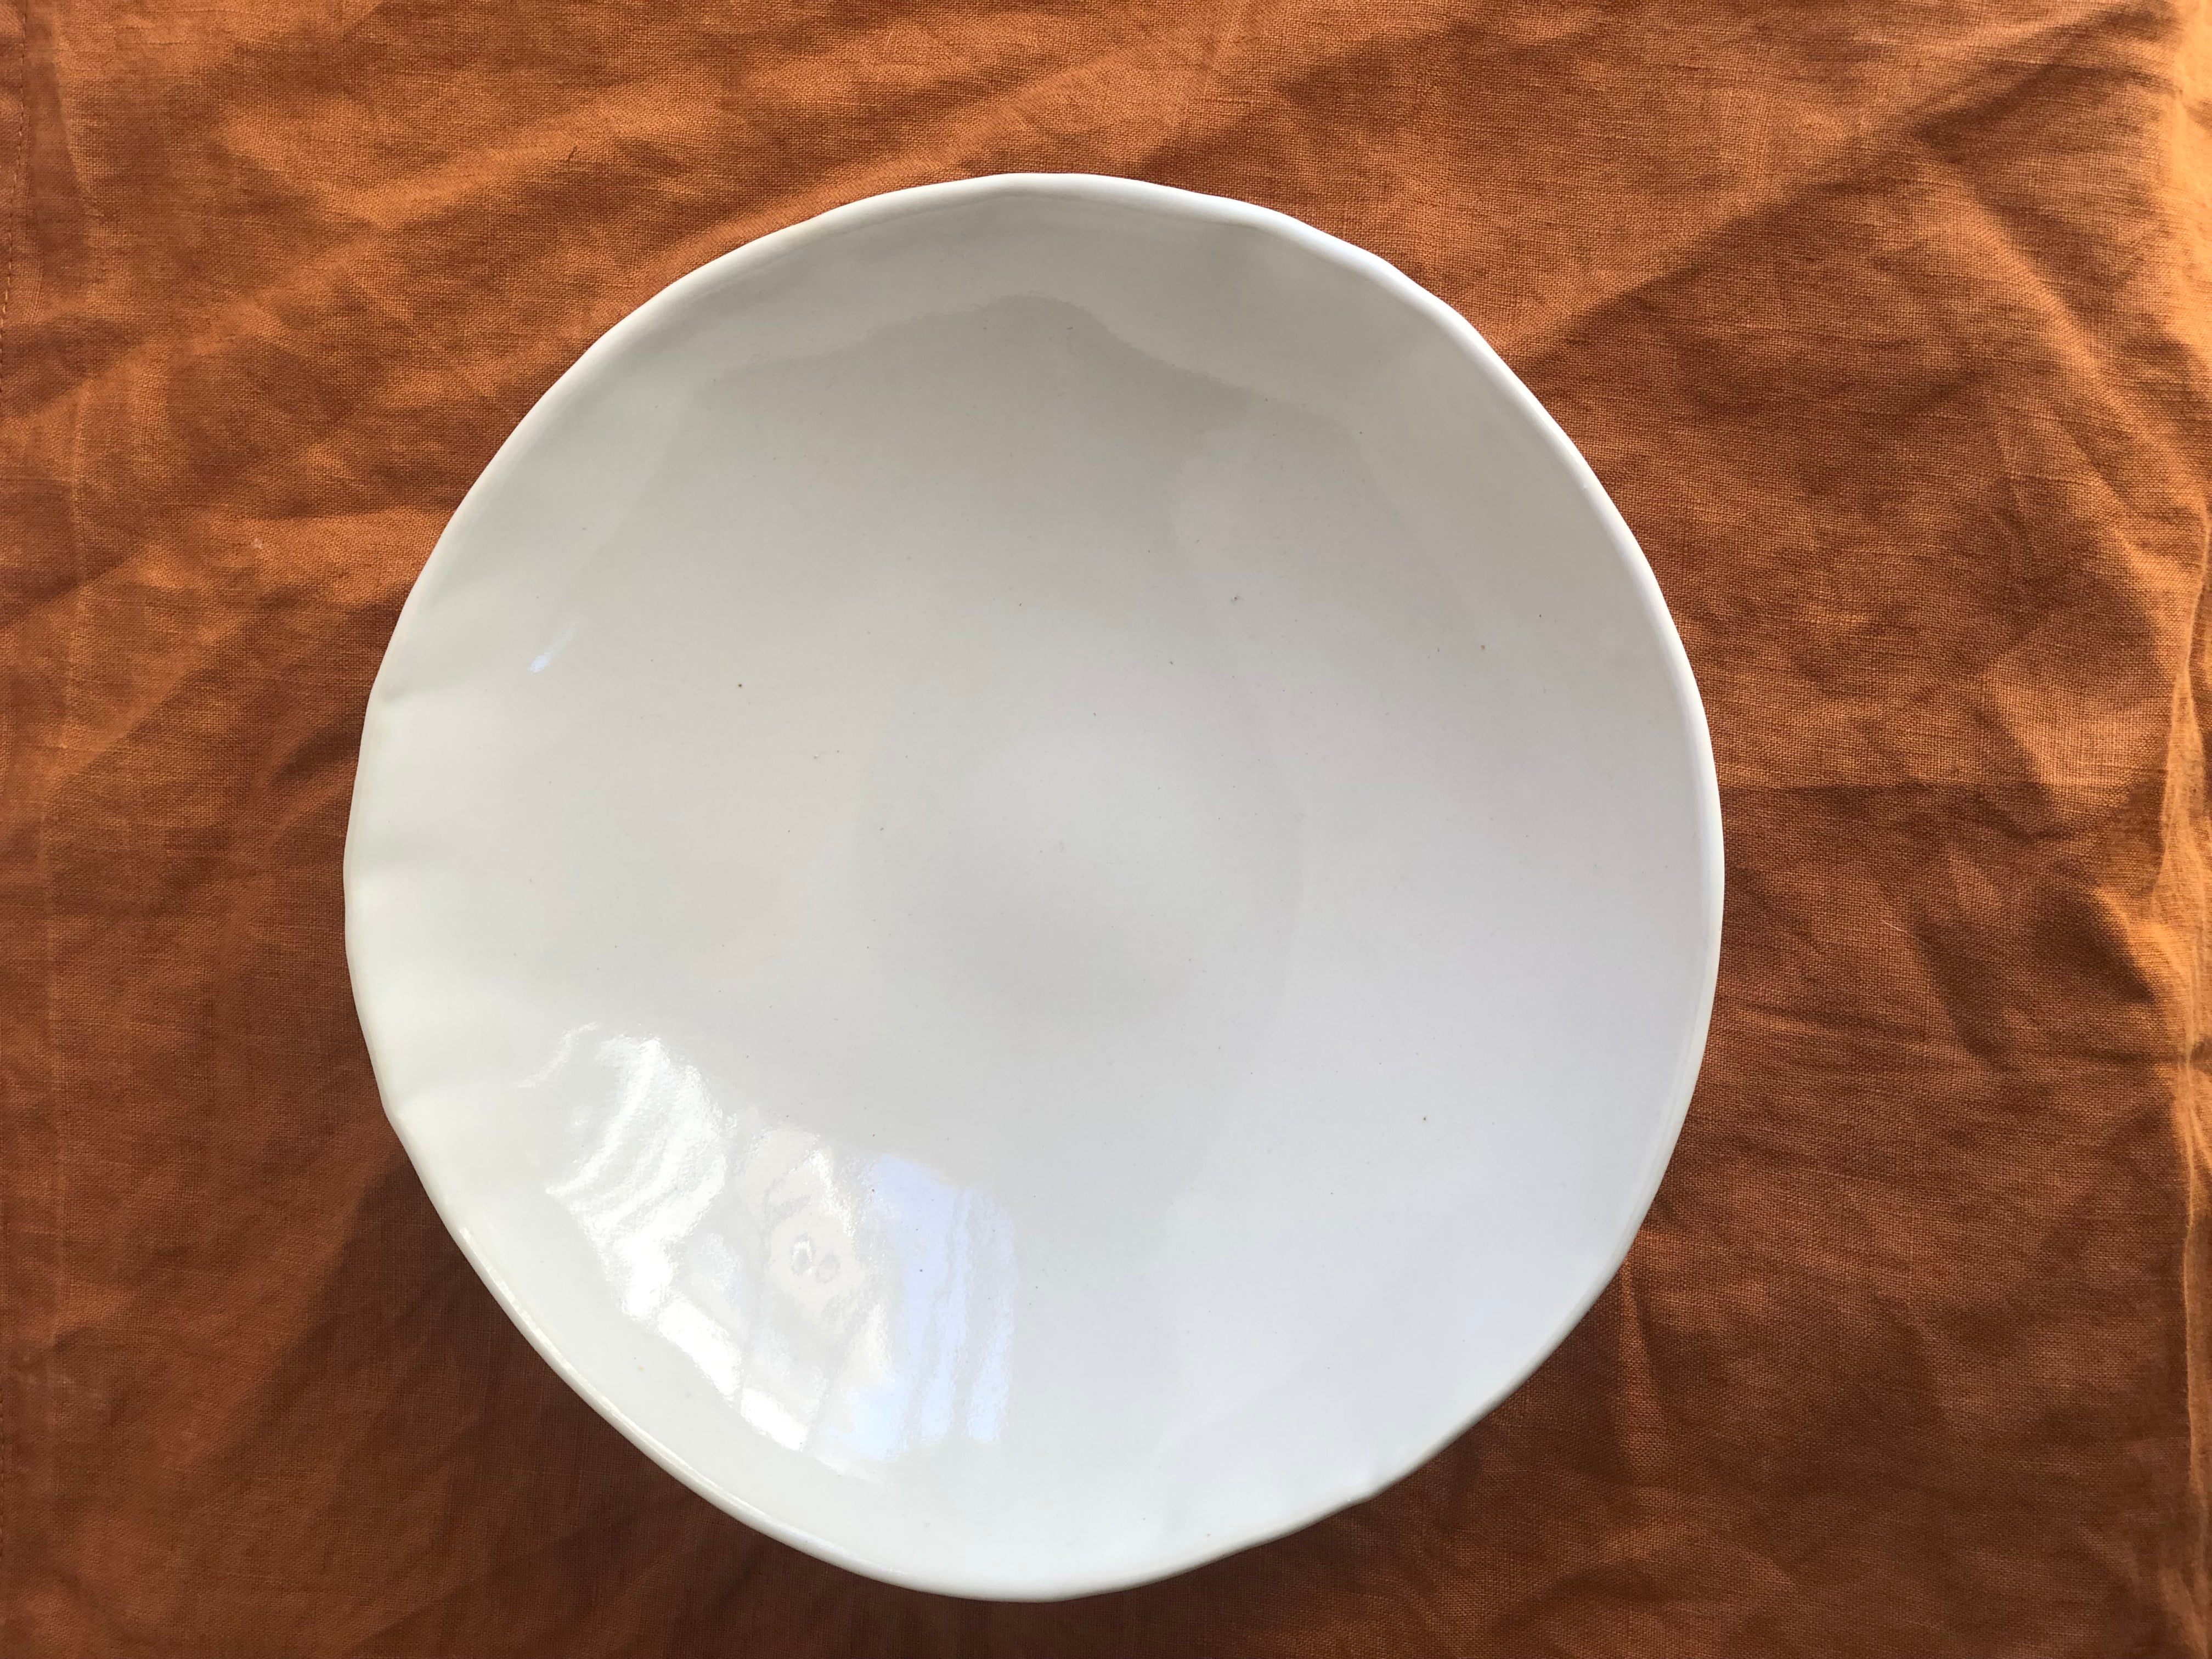 Large Daily Bowl - White Gloss